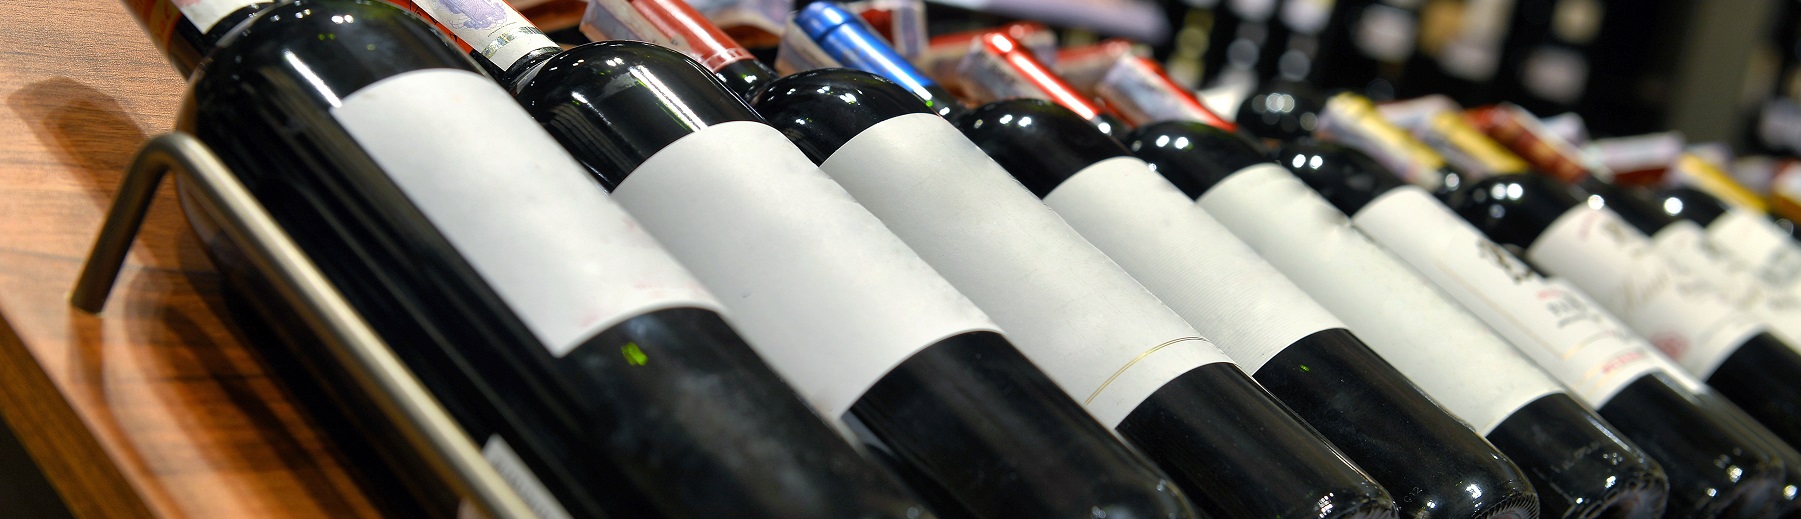 Bottles of wine displayed on a shelf